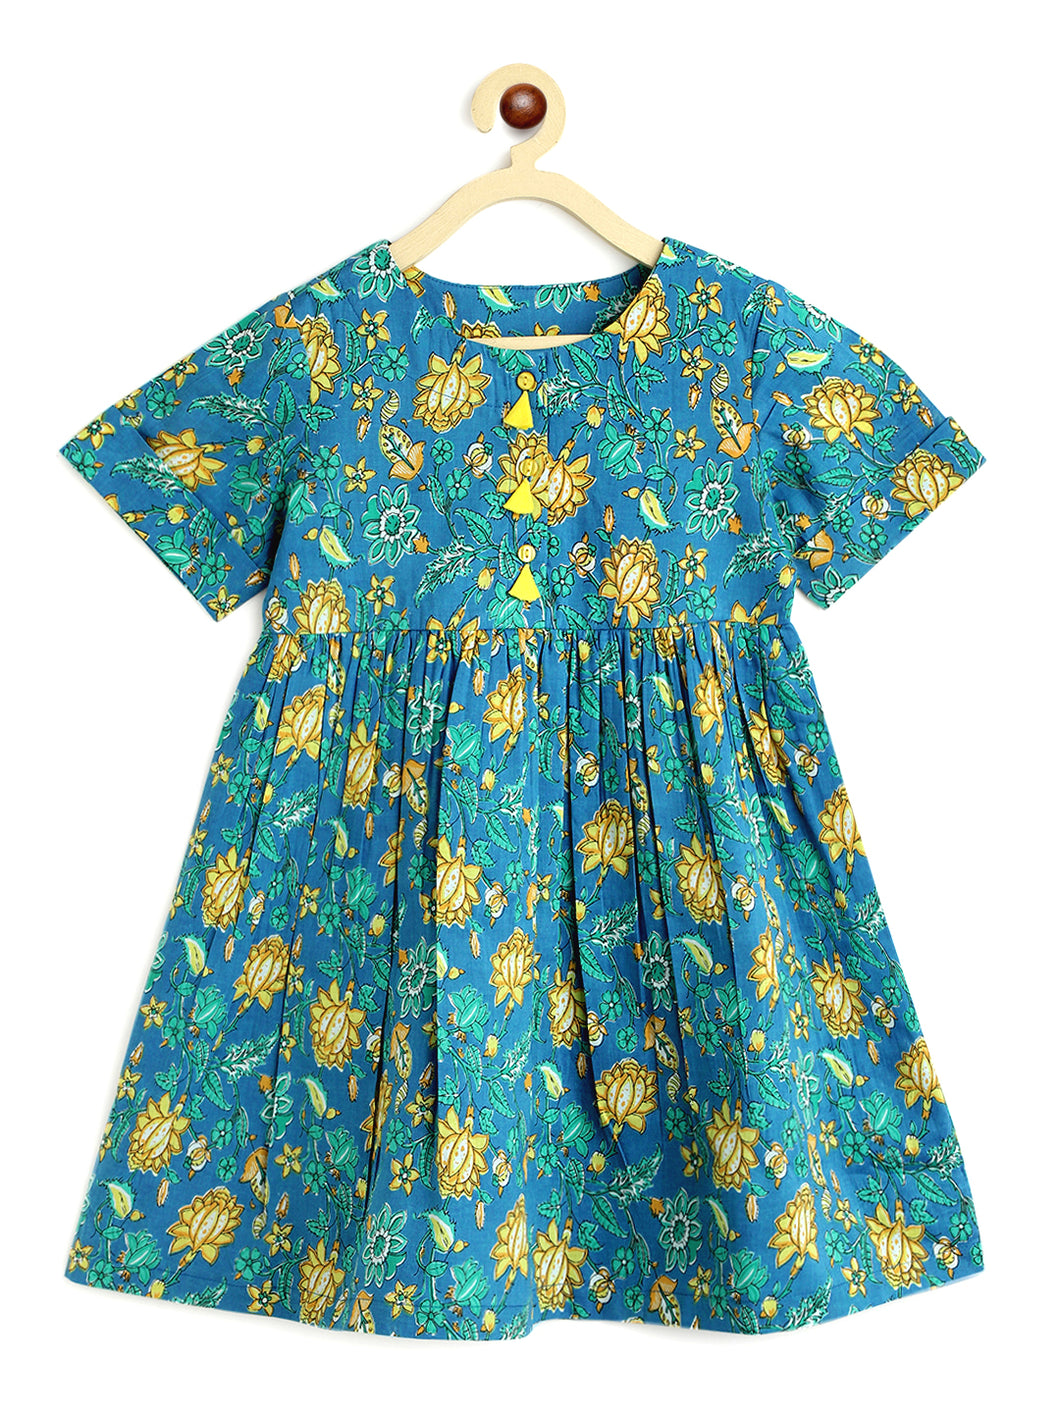 Campana Girls Zoe Dress - Floral Vine Print - Blue & Sea Green